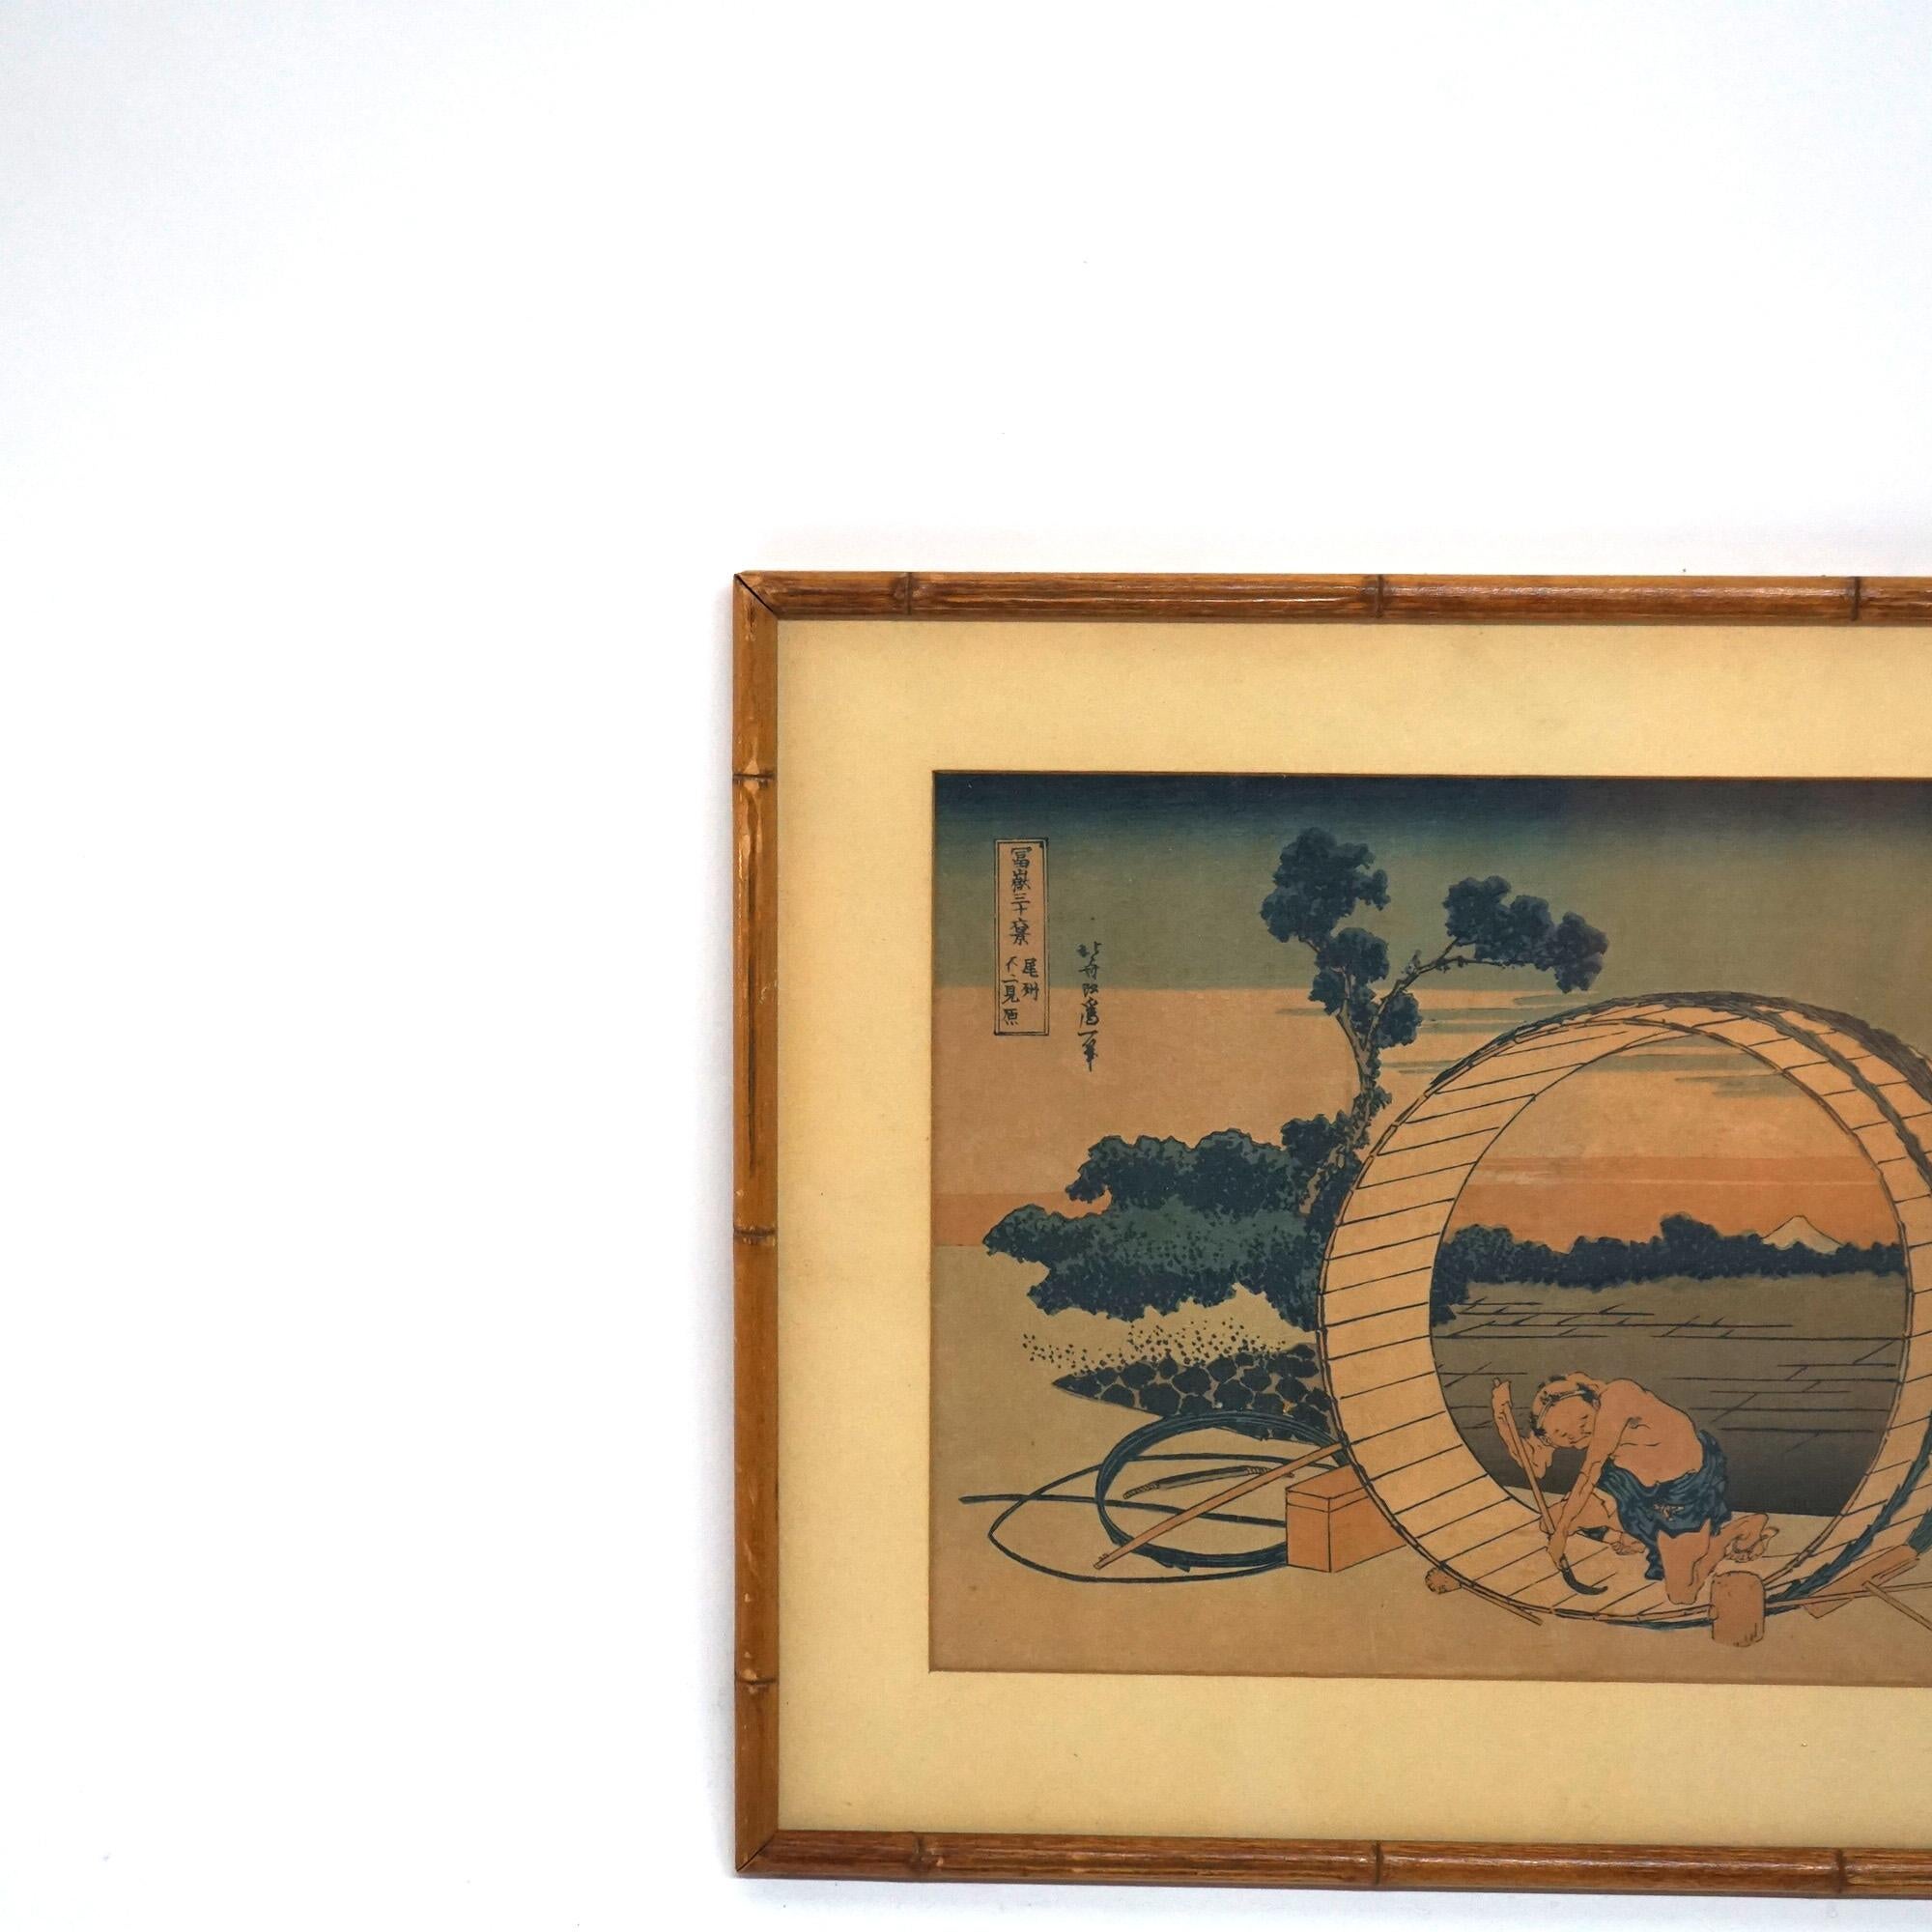 Japanese Woodblock Print by Hokusai Katsushika of Barrel Maker & Mt Fugi 20thC

Measures - 14.25